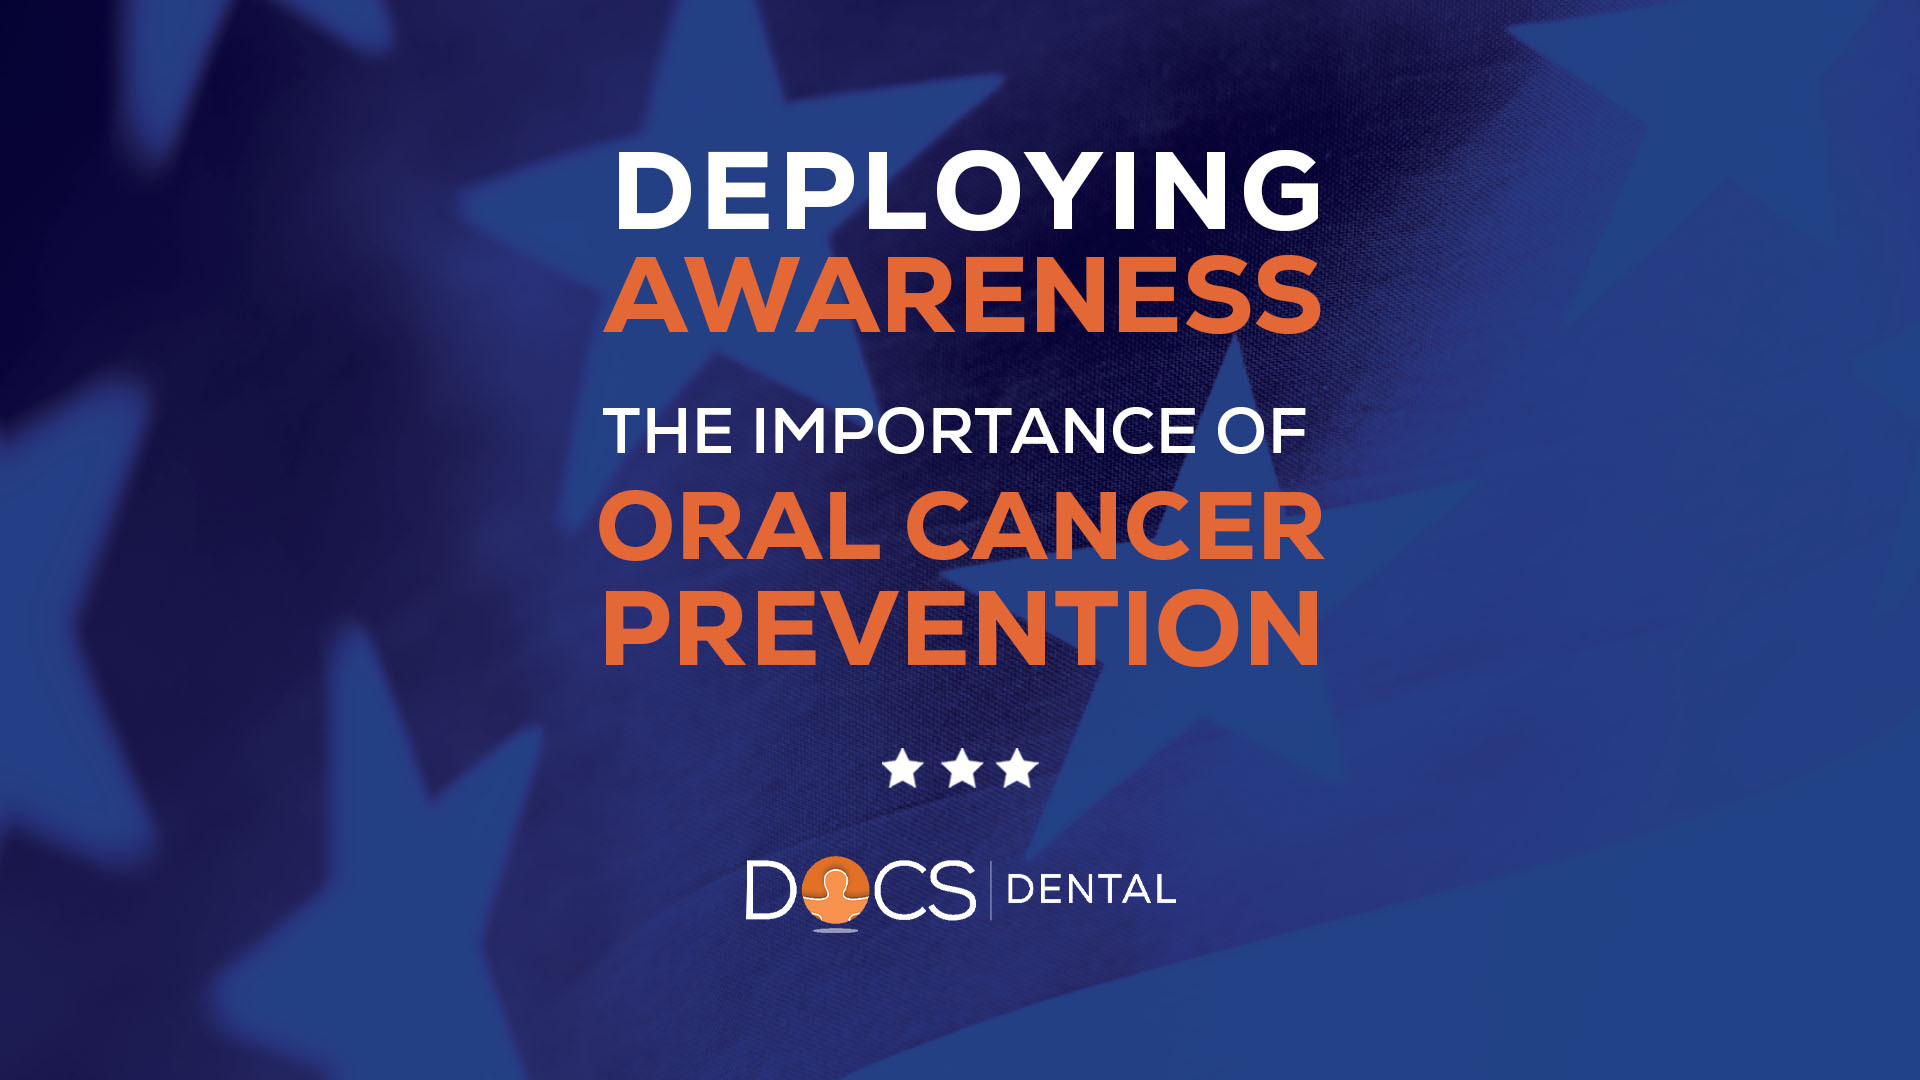 Oral cancer prevention